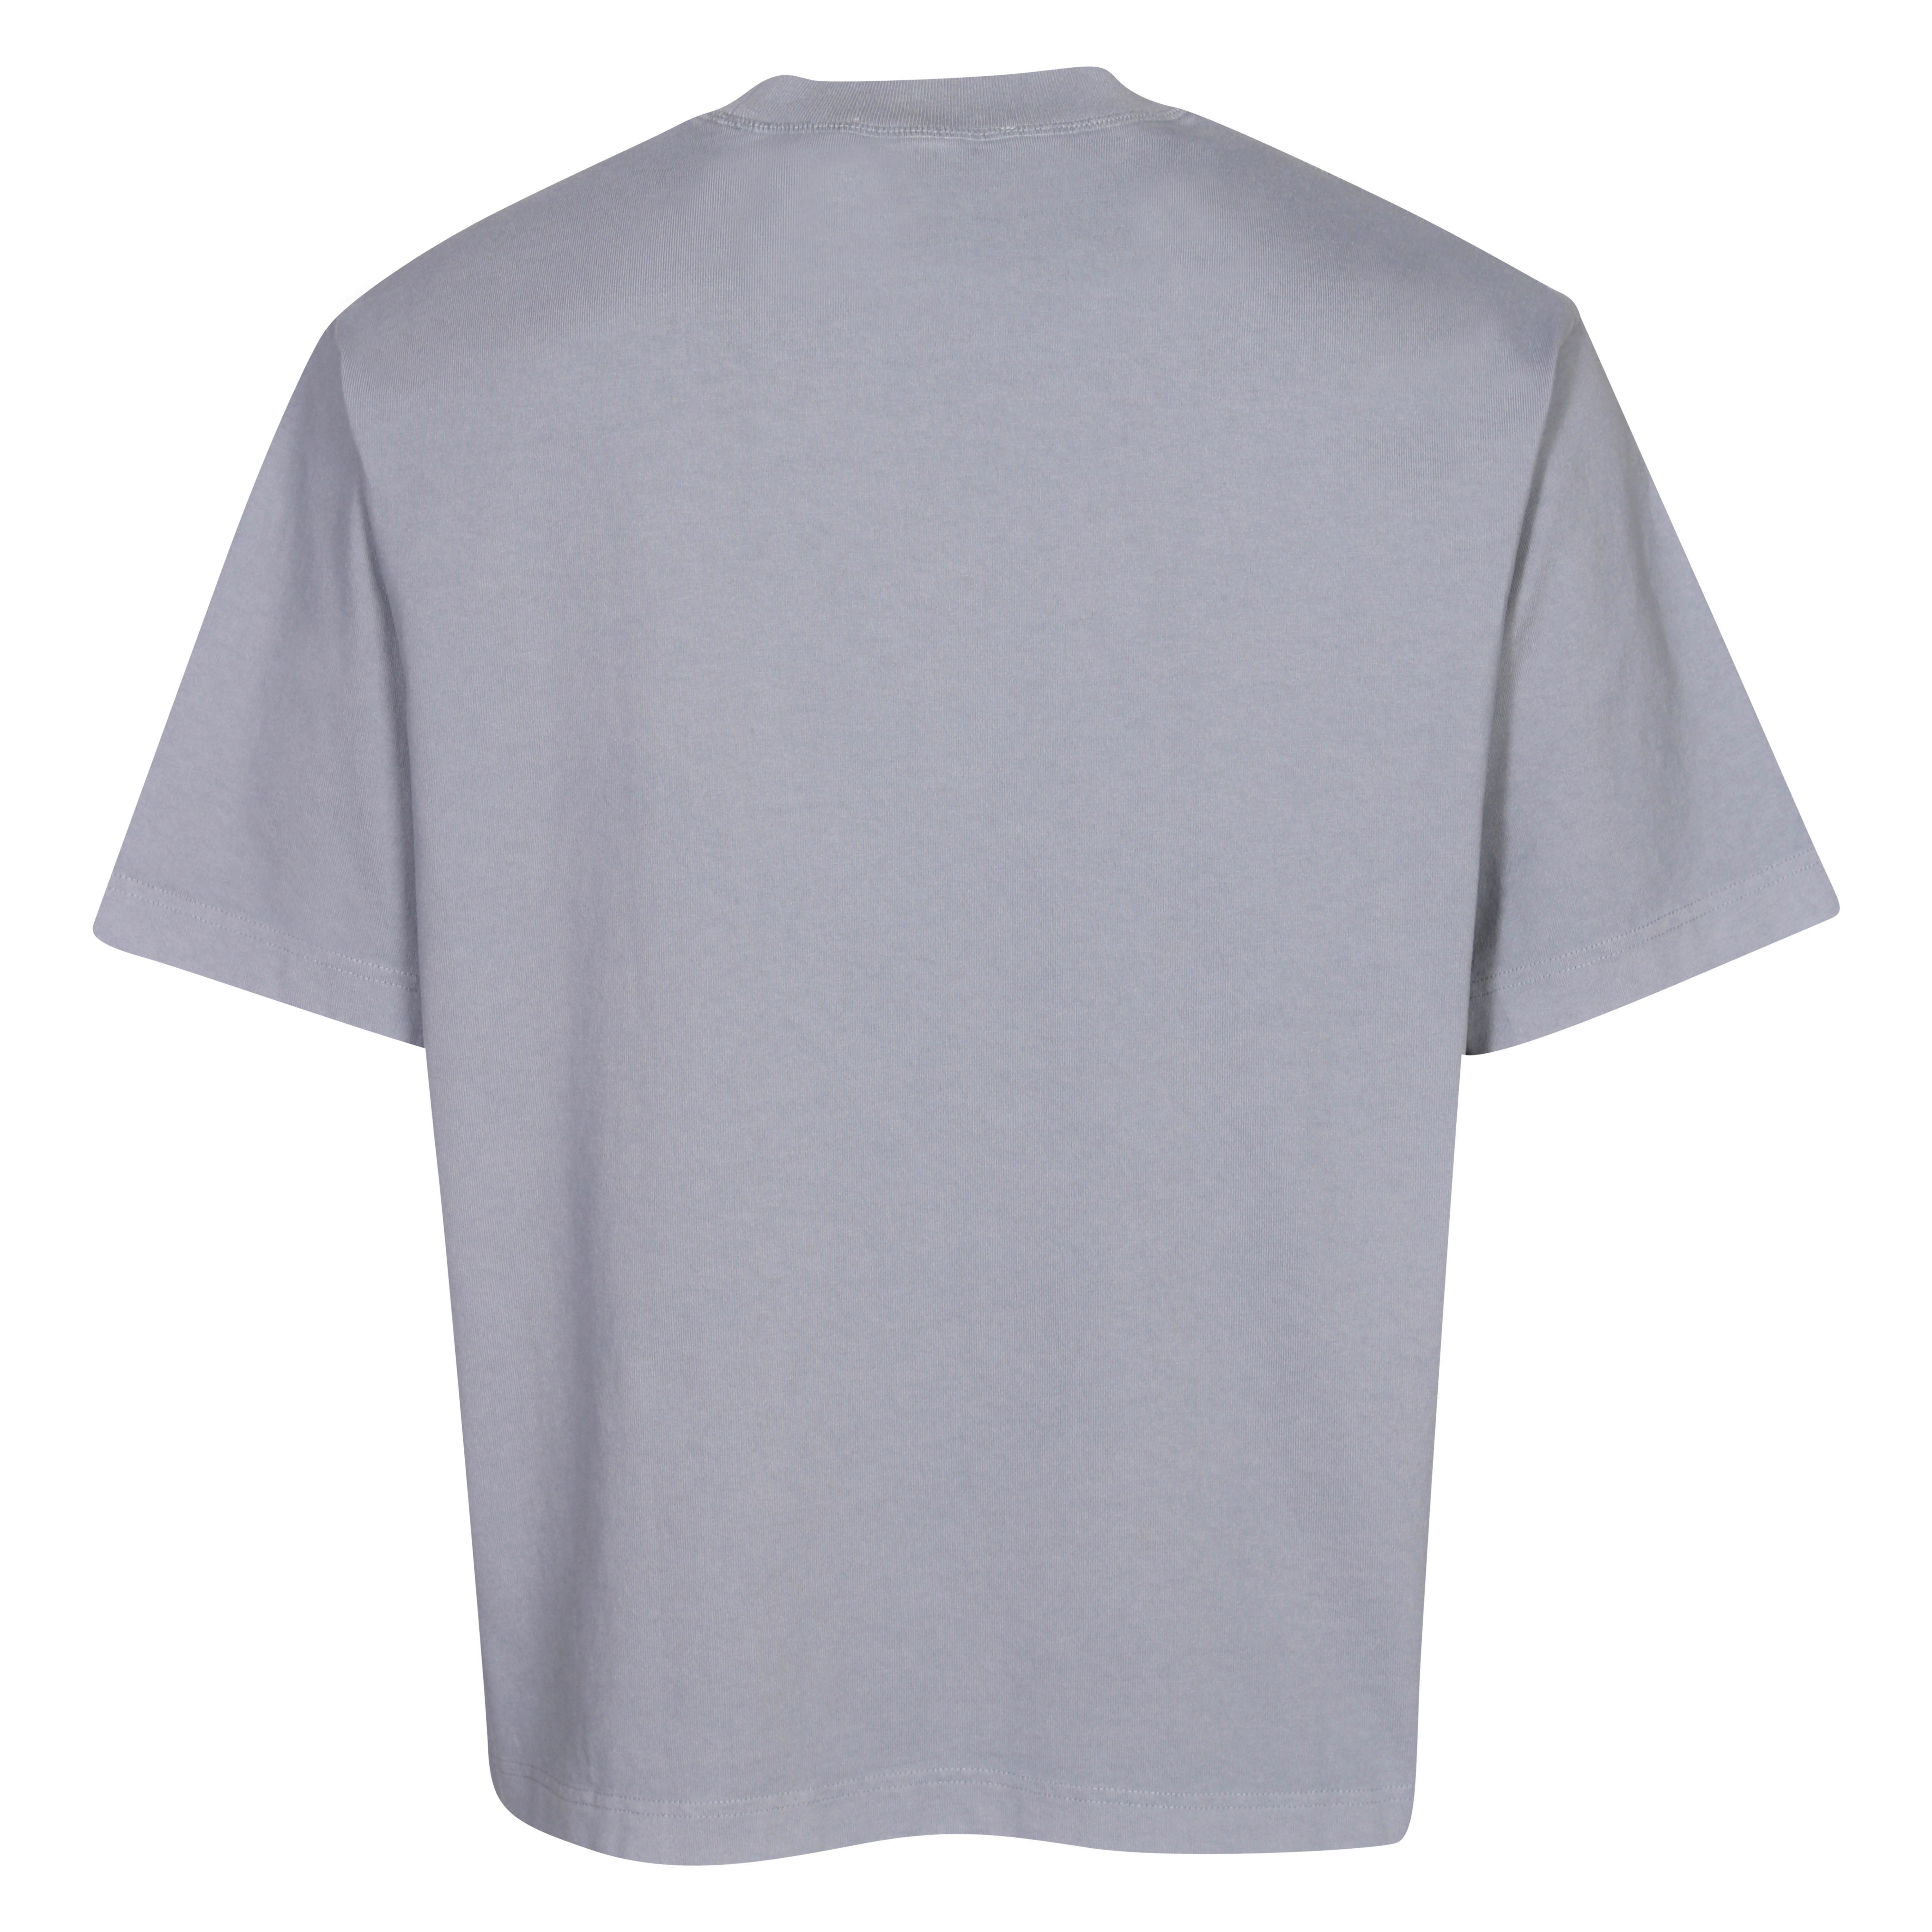 Acne Studios Stamp T-Shirt in Steel Grey M